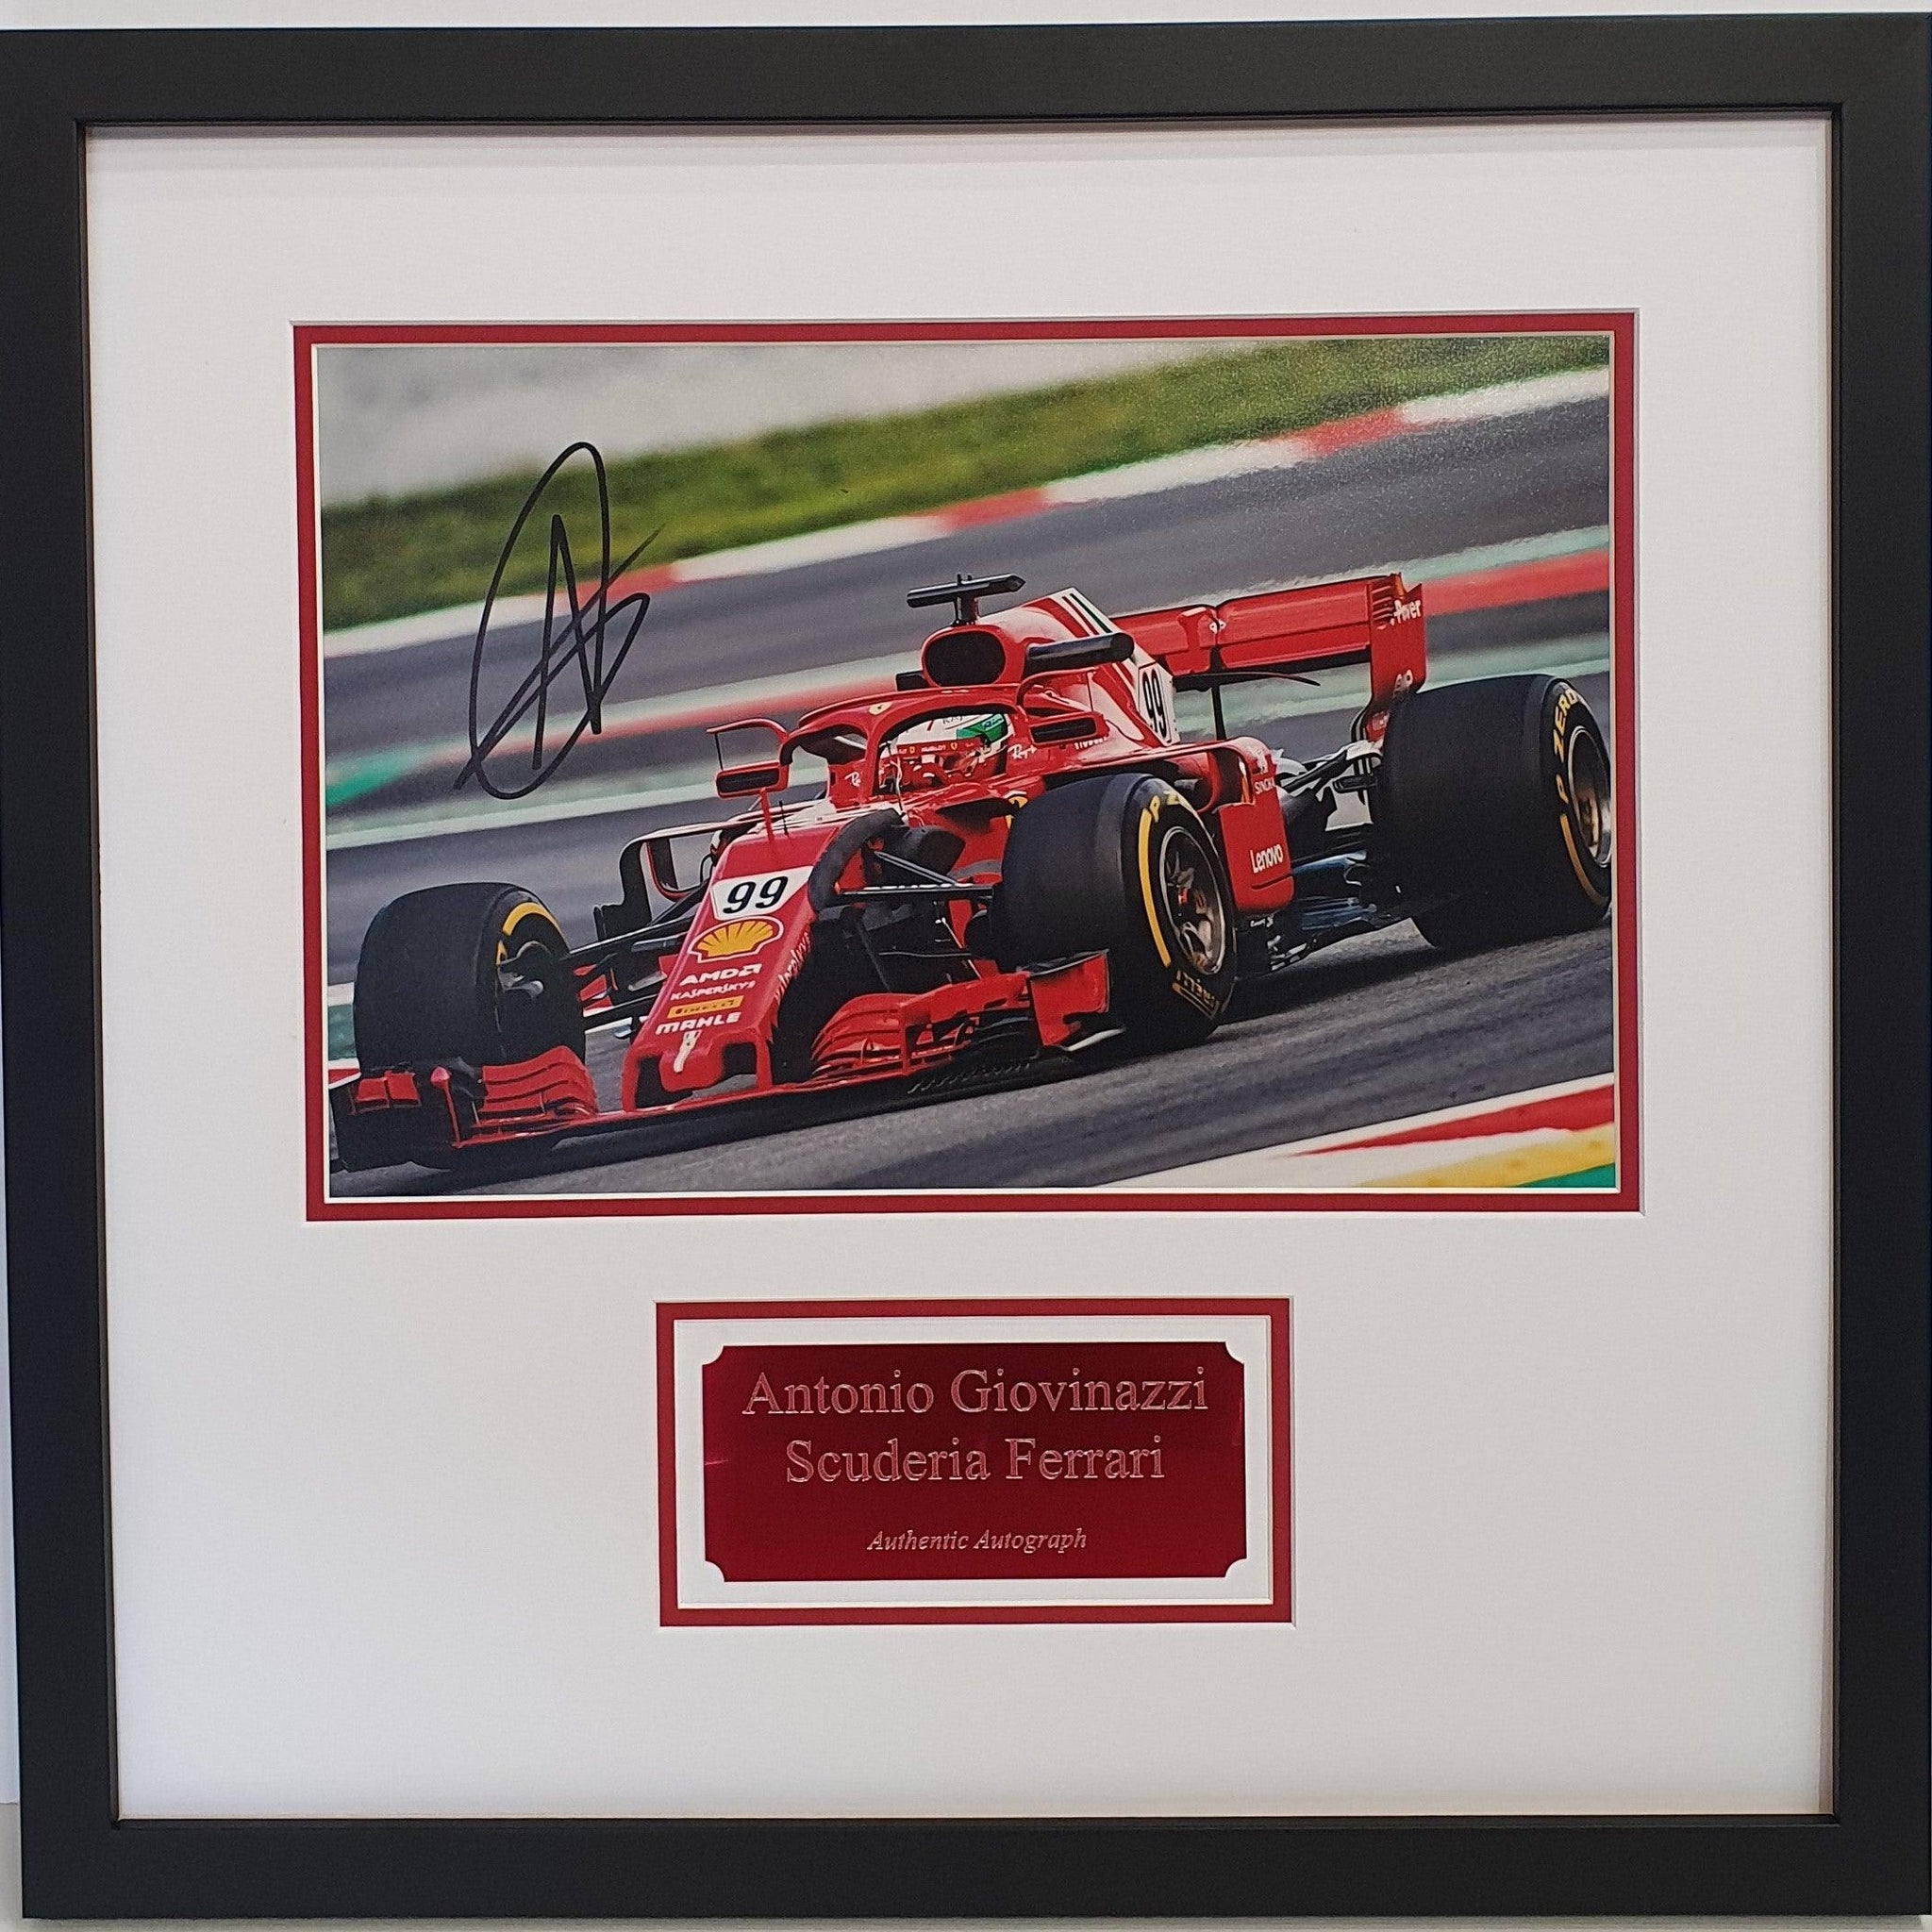 Antonio Giovinazzi Signed Ferrari Photo Framed. - Darling Picture Framing